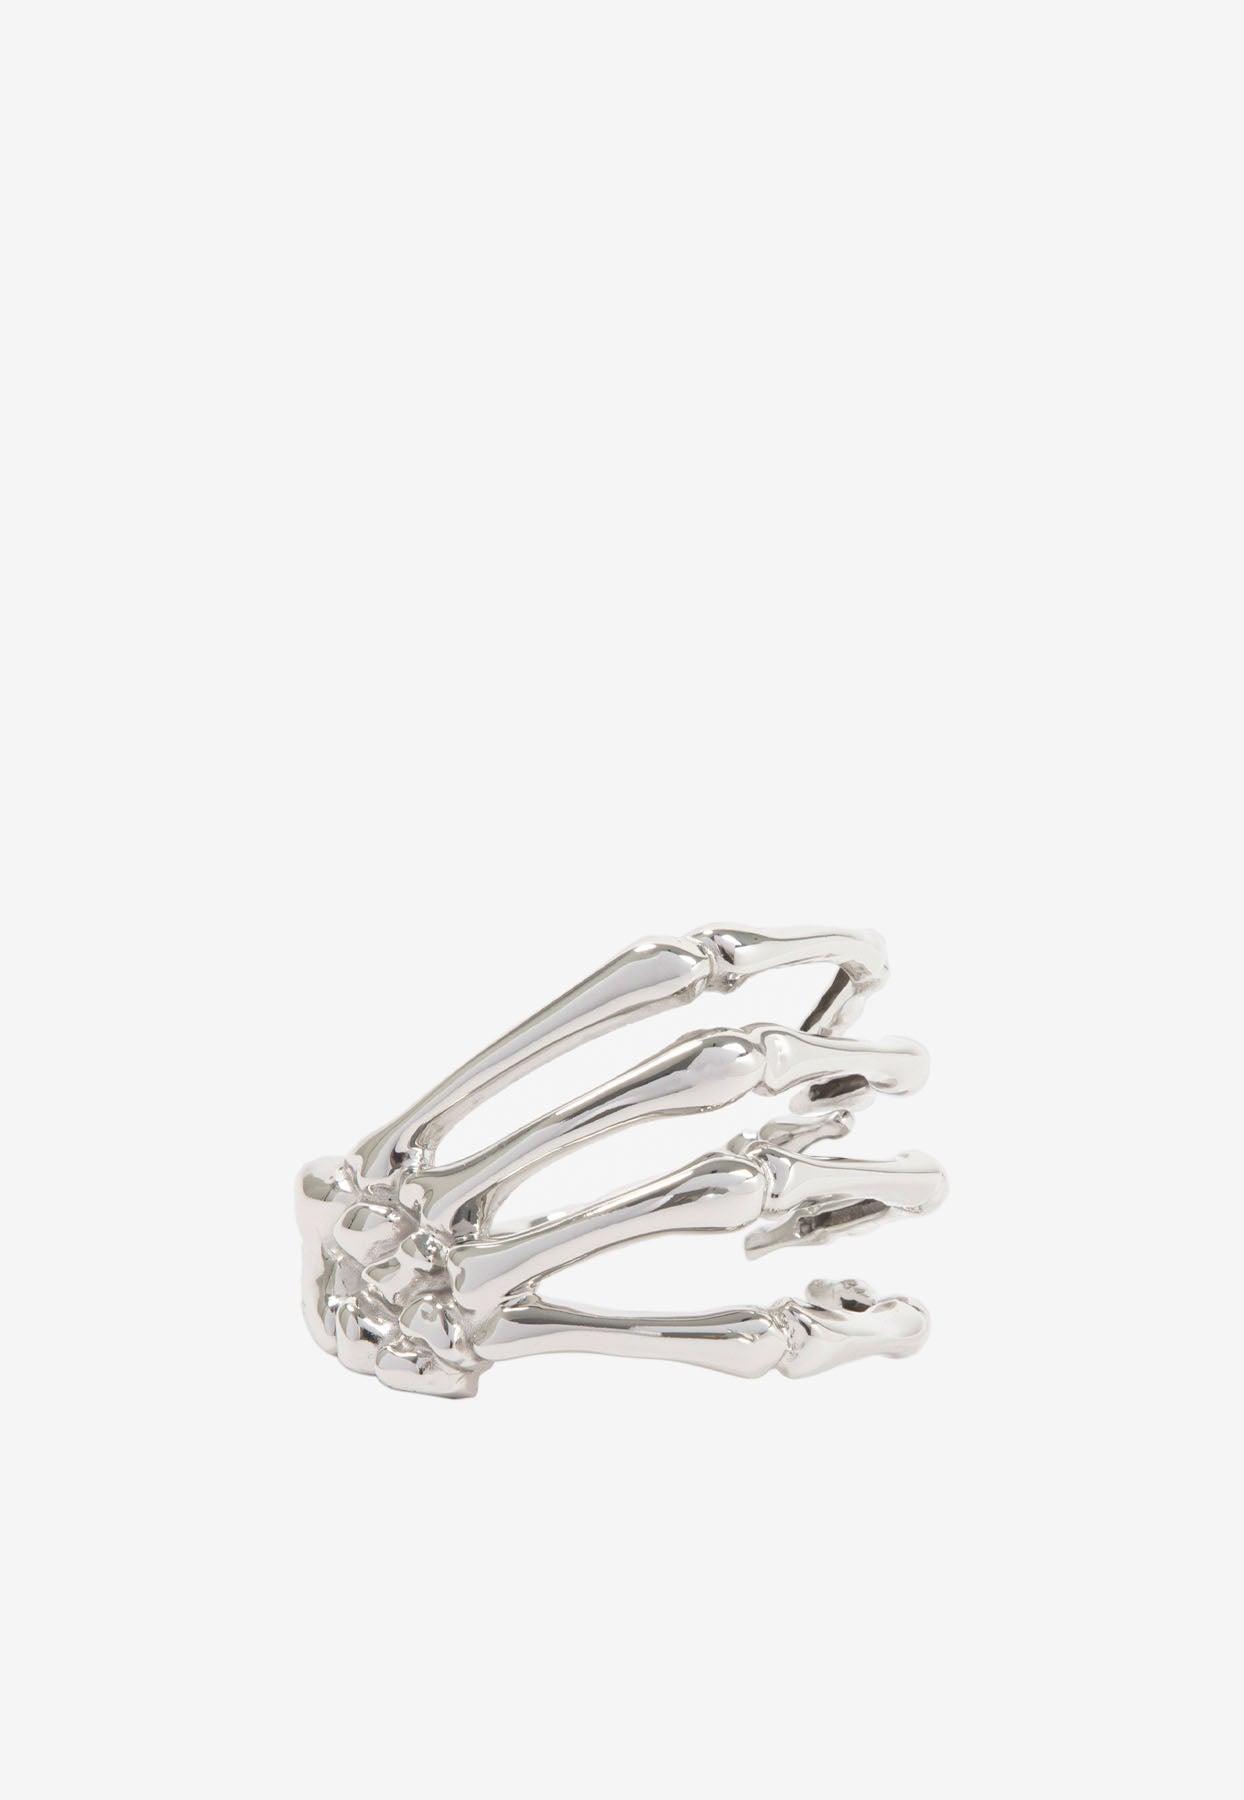 Gothic Skeleton Bone Bracelet | Party Decoration Jewelry | Skeleton Hand  Bracelet - Bracelets - Aliexpress